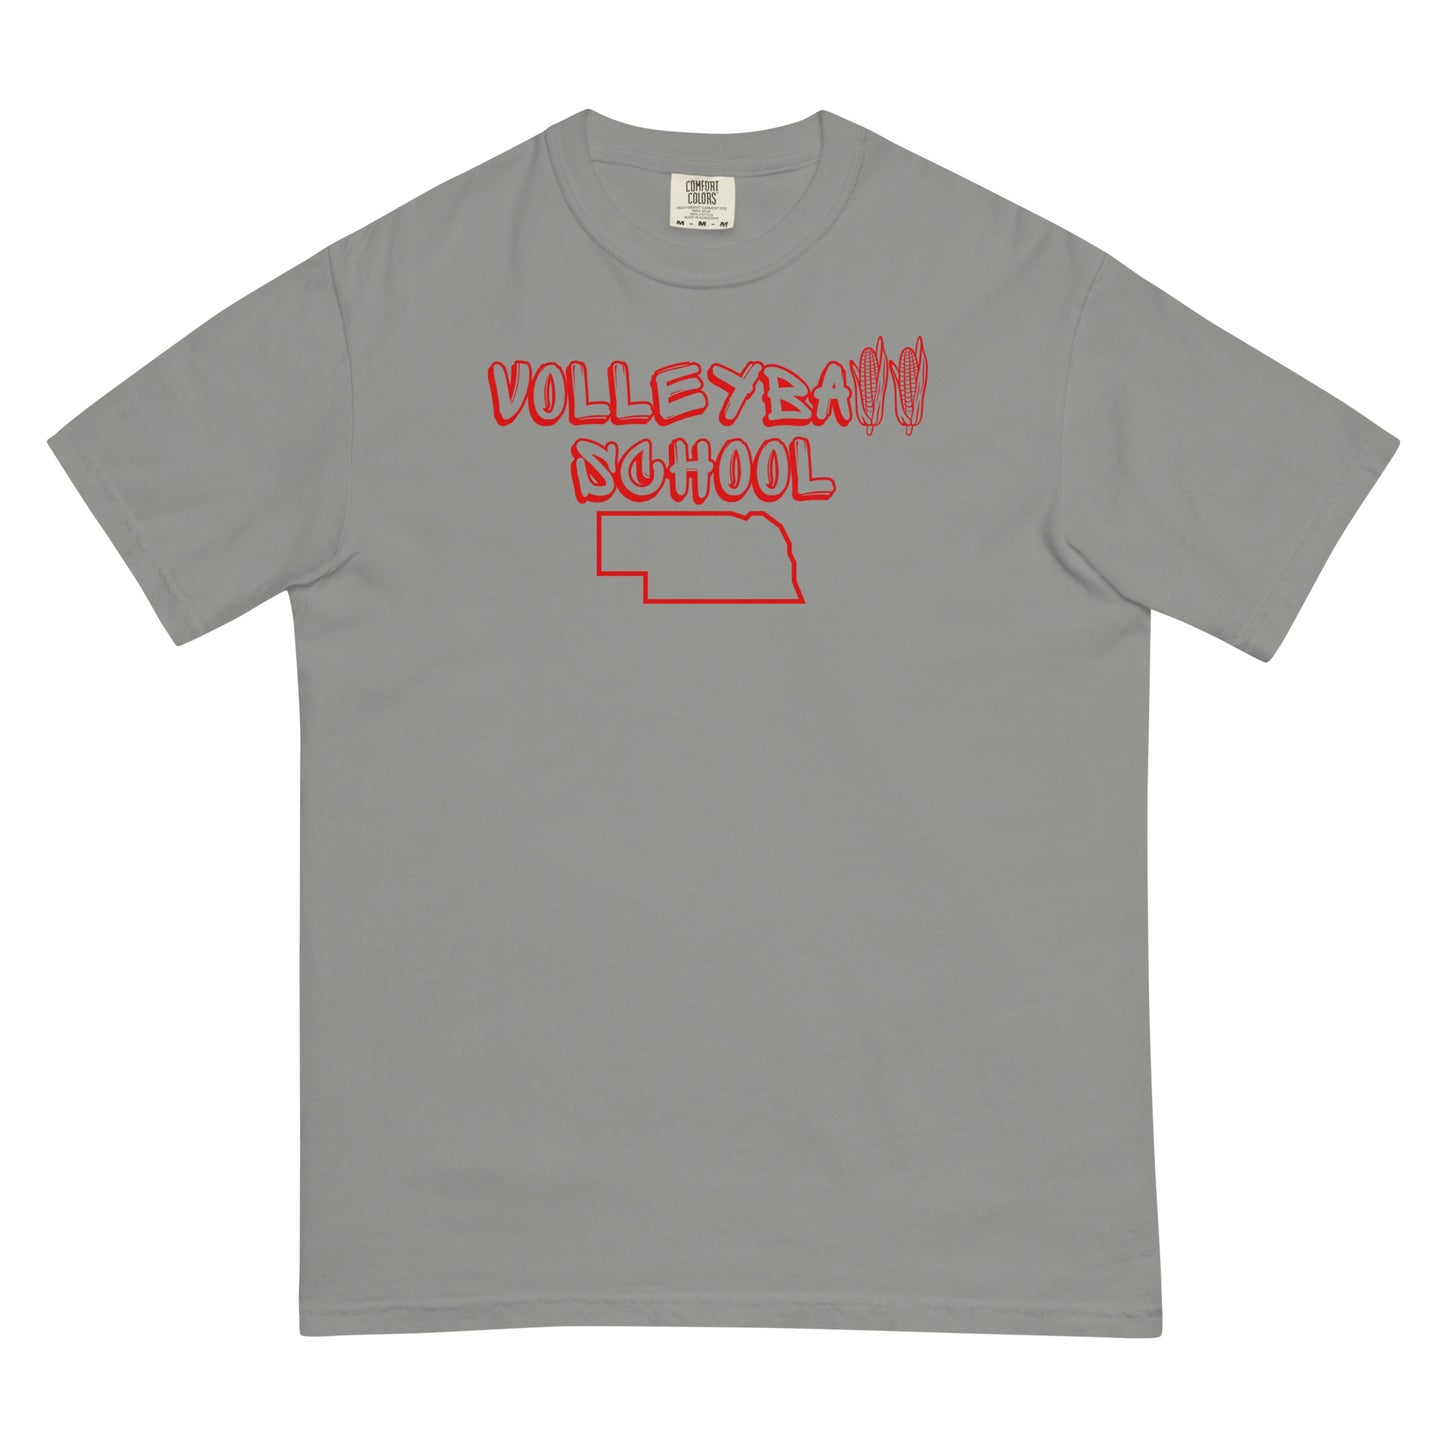 Nebraska Volleyball School T-shirt